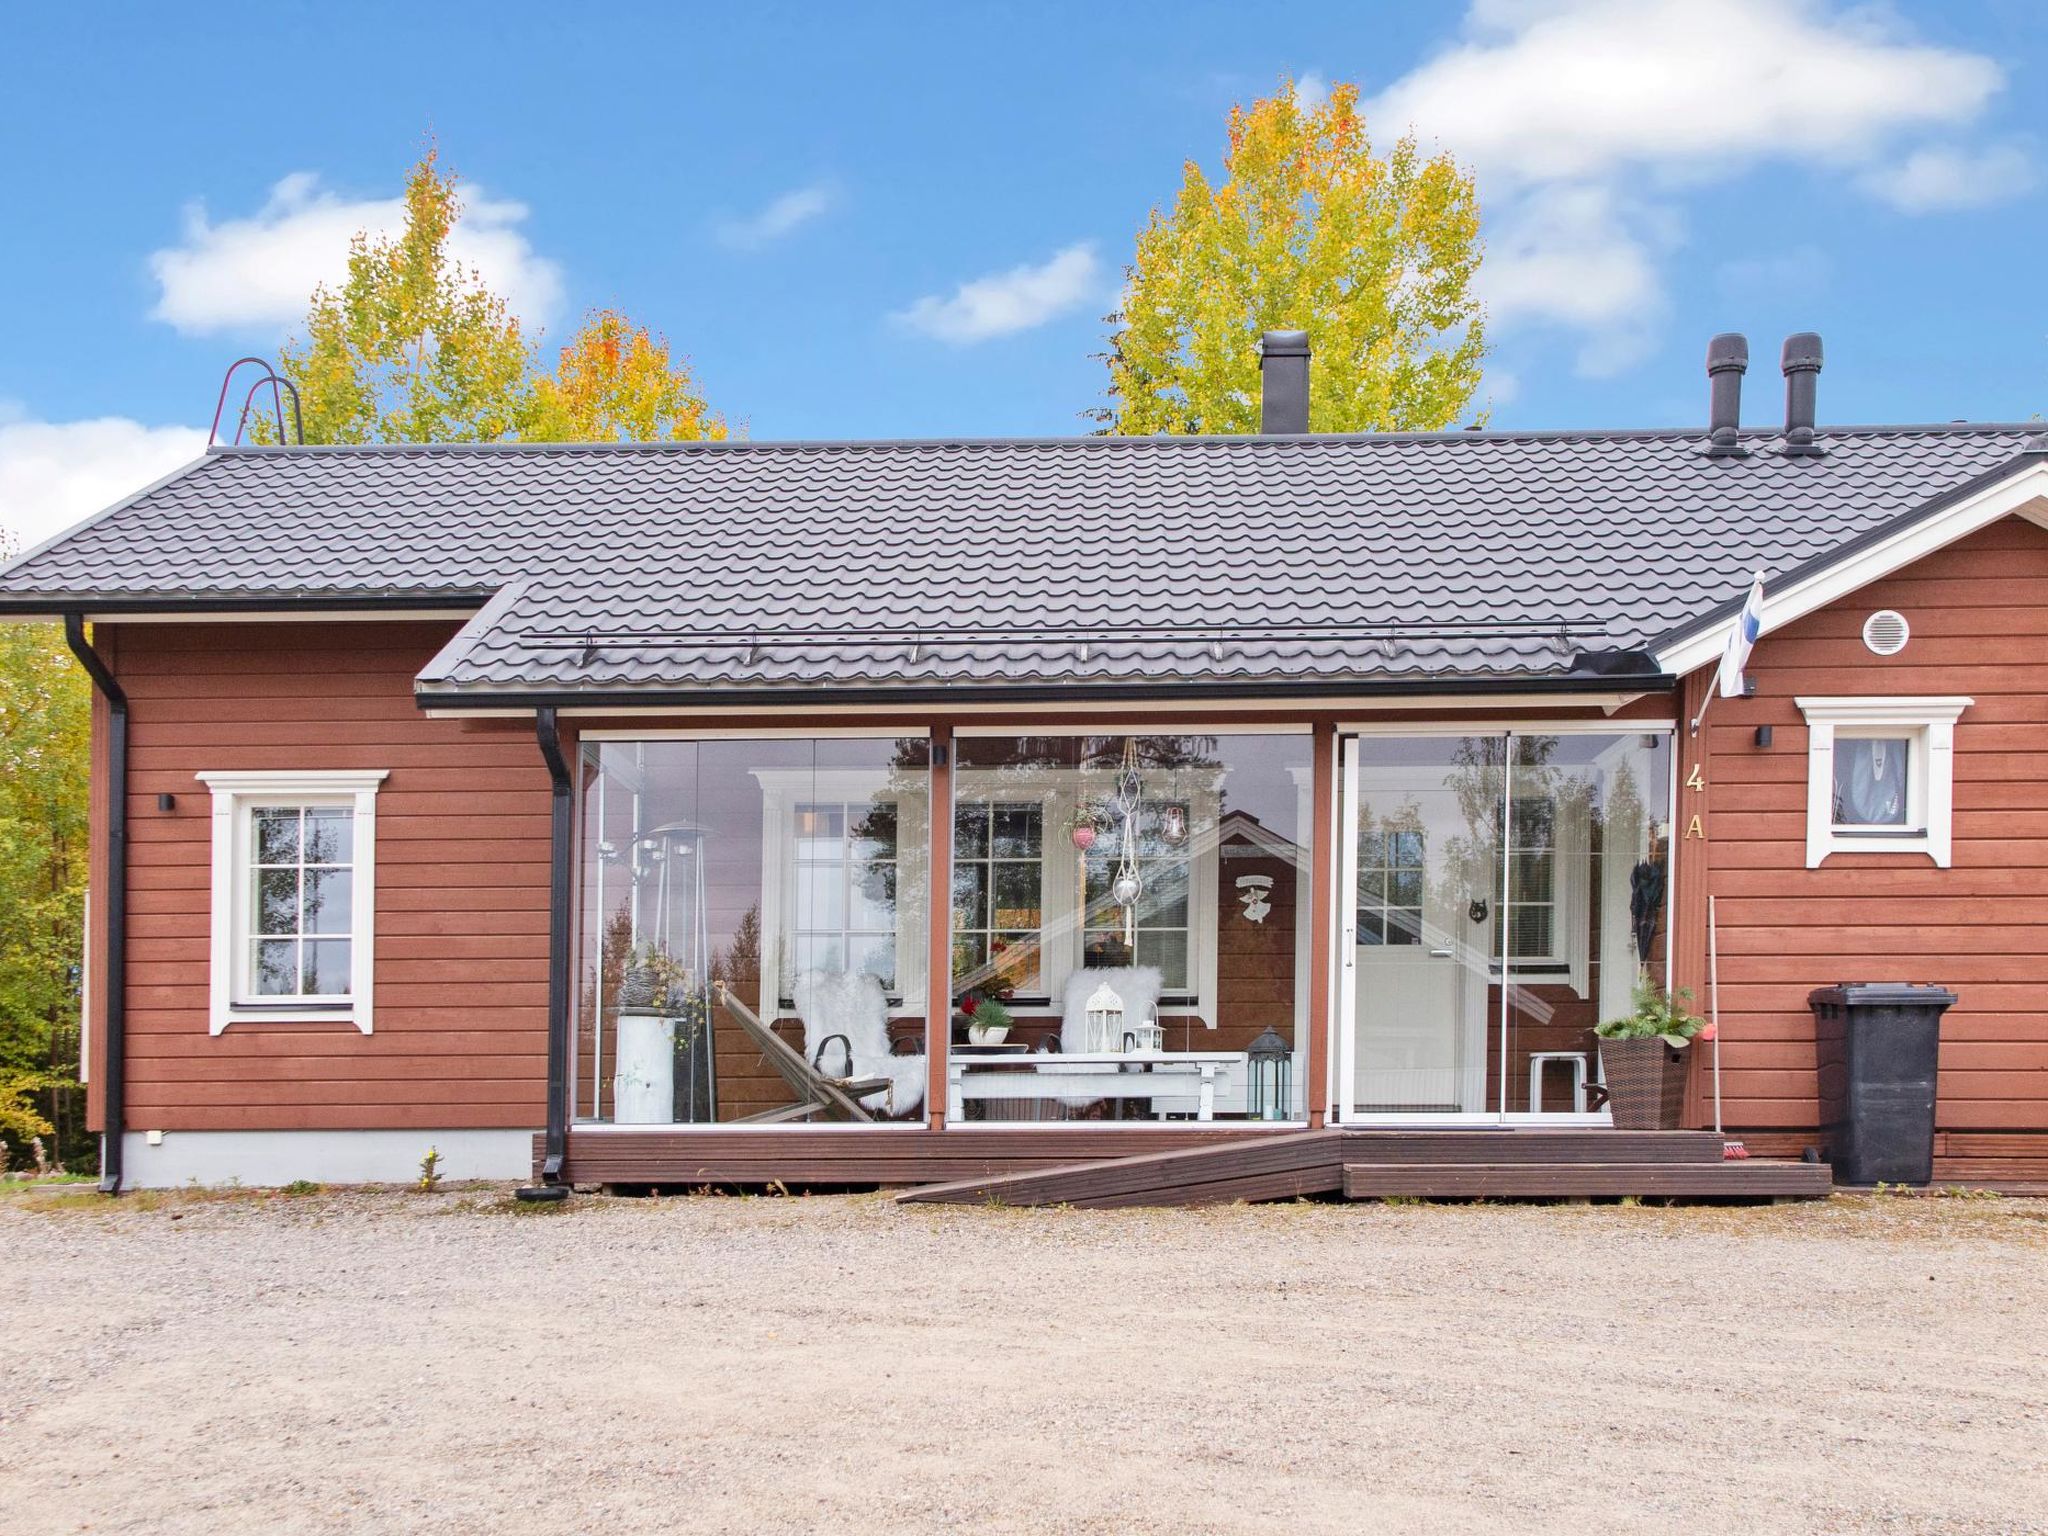 Photo 3 - 2 bedroom House in Kuopio with sauna